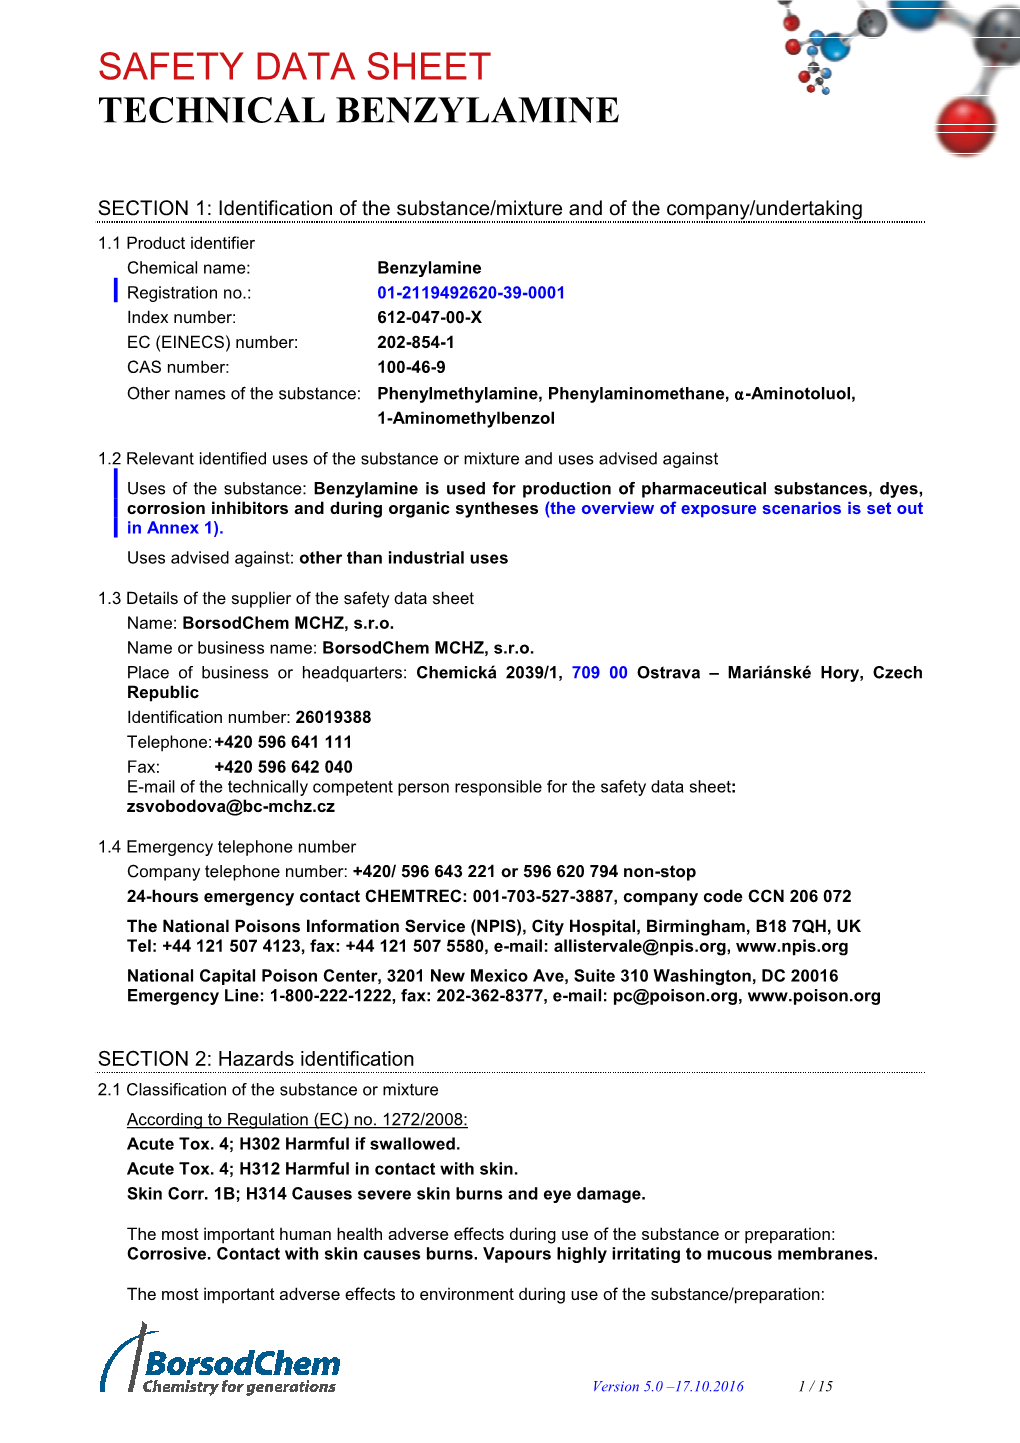 Safety Data Sheet Technical Benzylamine